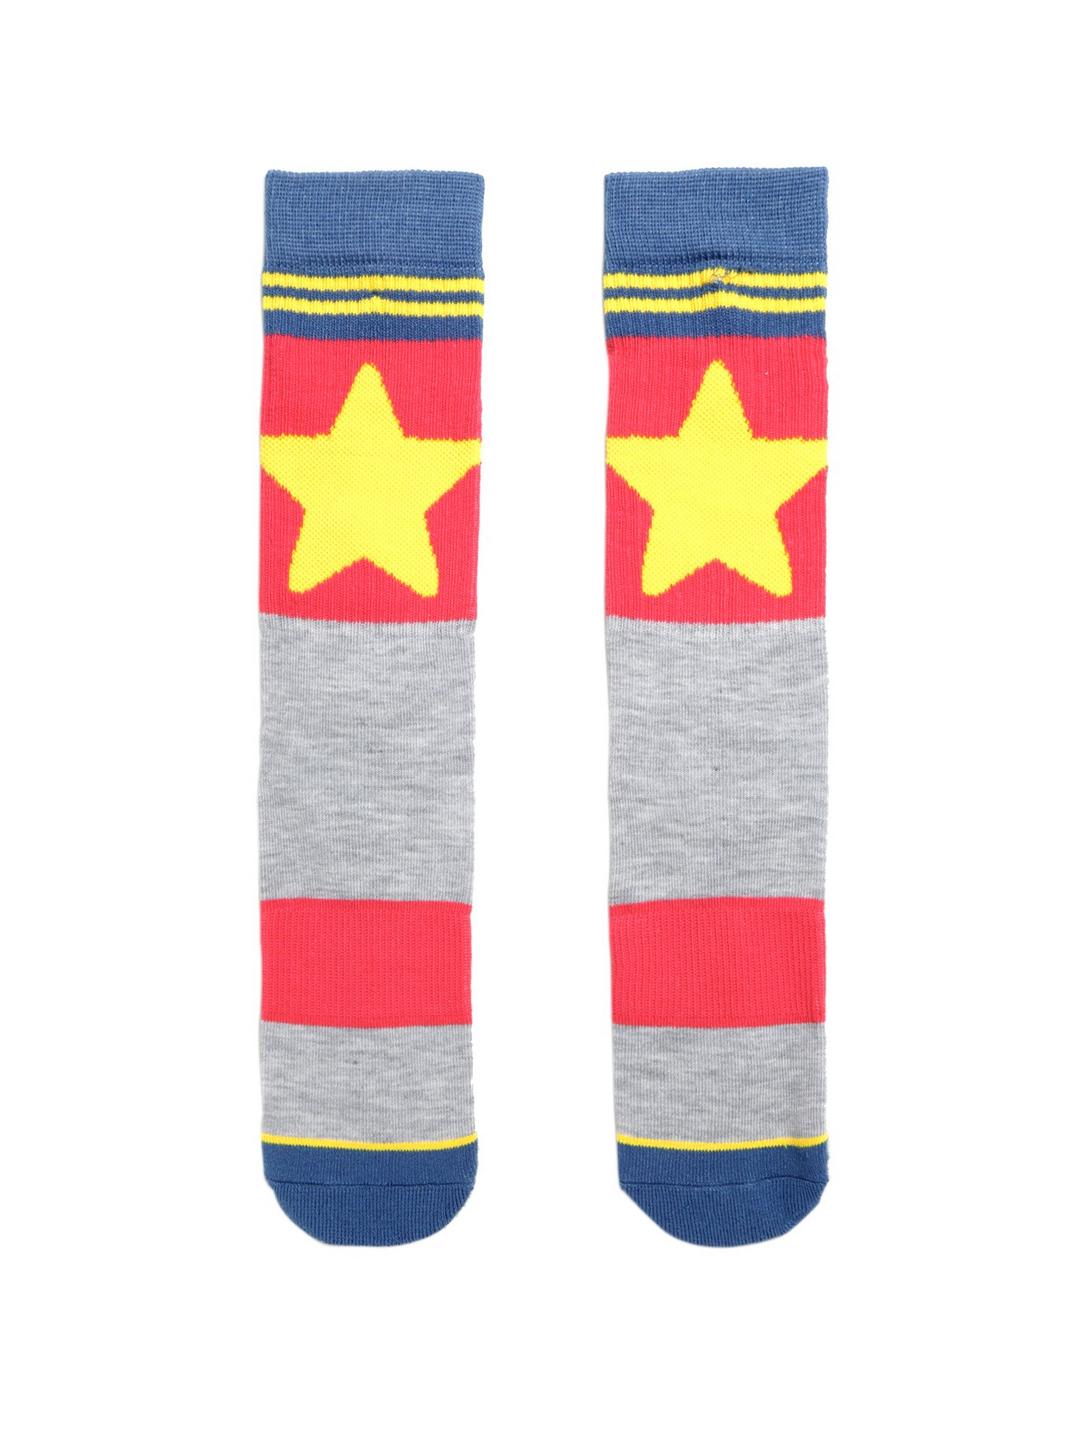 Steven Universe Star Crew Socks, , hi-res